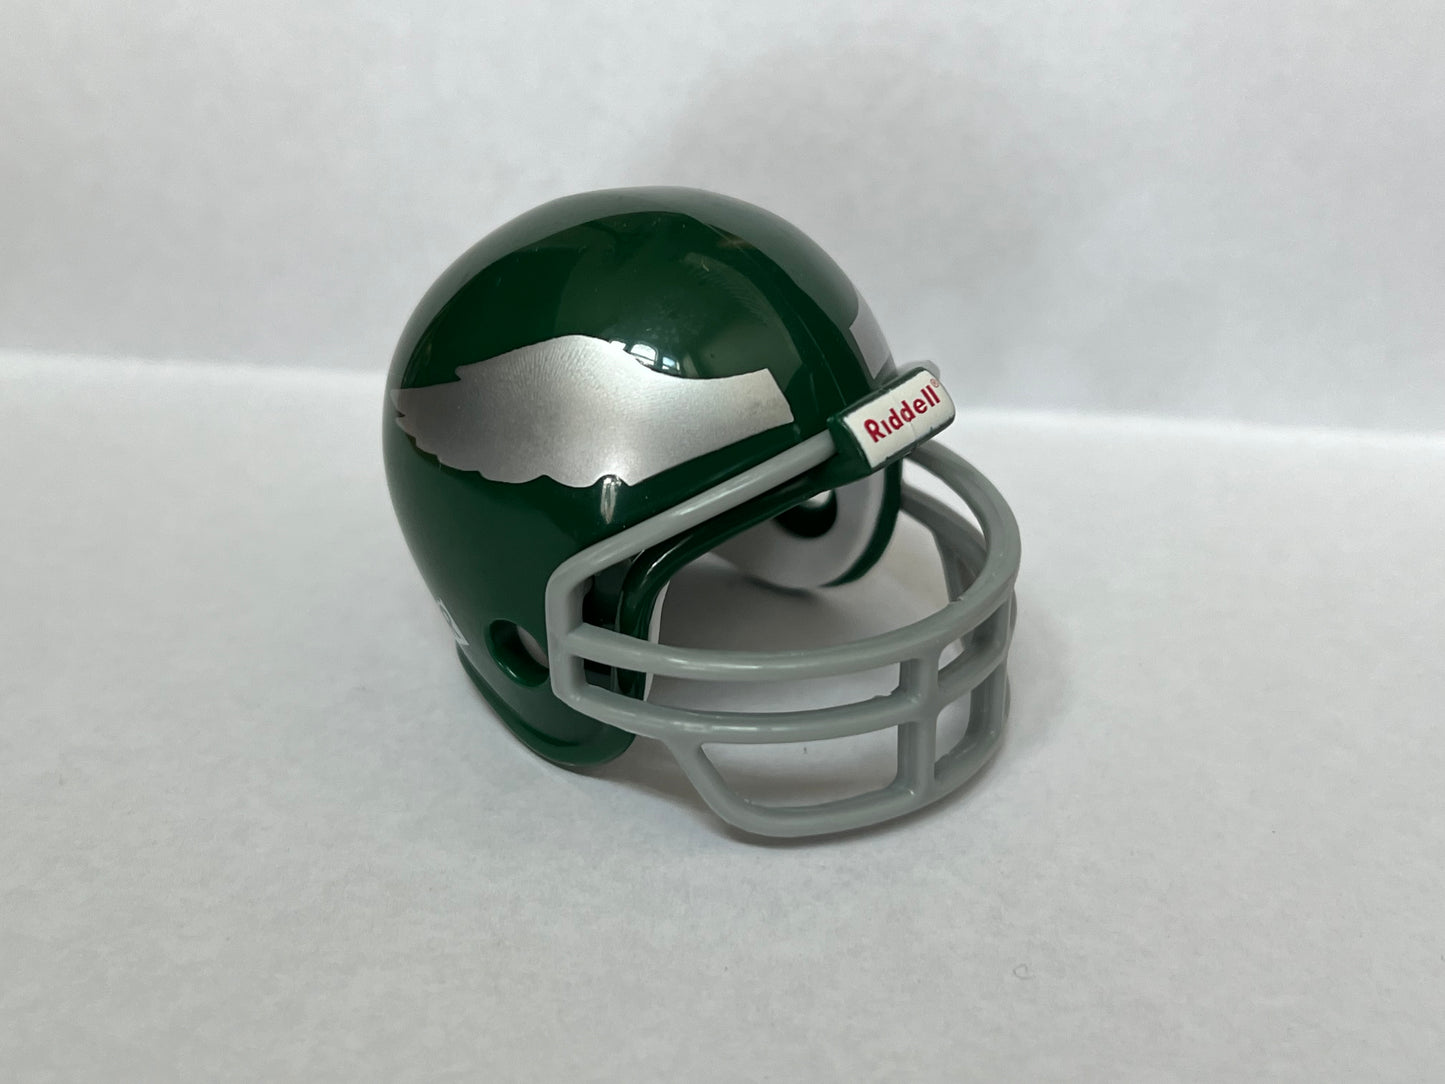 Philadelphia Eagles Riddell NFL Pocket Pro Helmet 1955-1968 Throwback (Green Helmet, Silver Wings with Grey Mask) from series 1  WESTBROOKSPORTSCARDS   